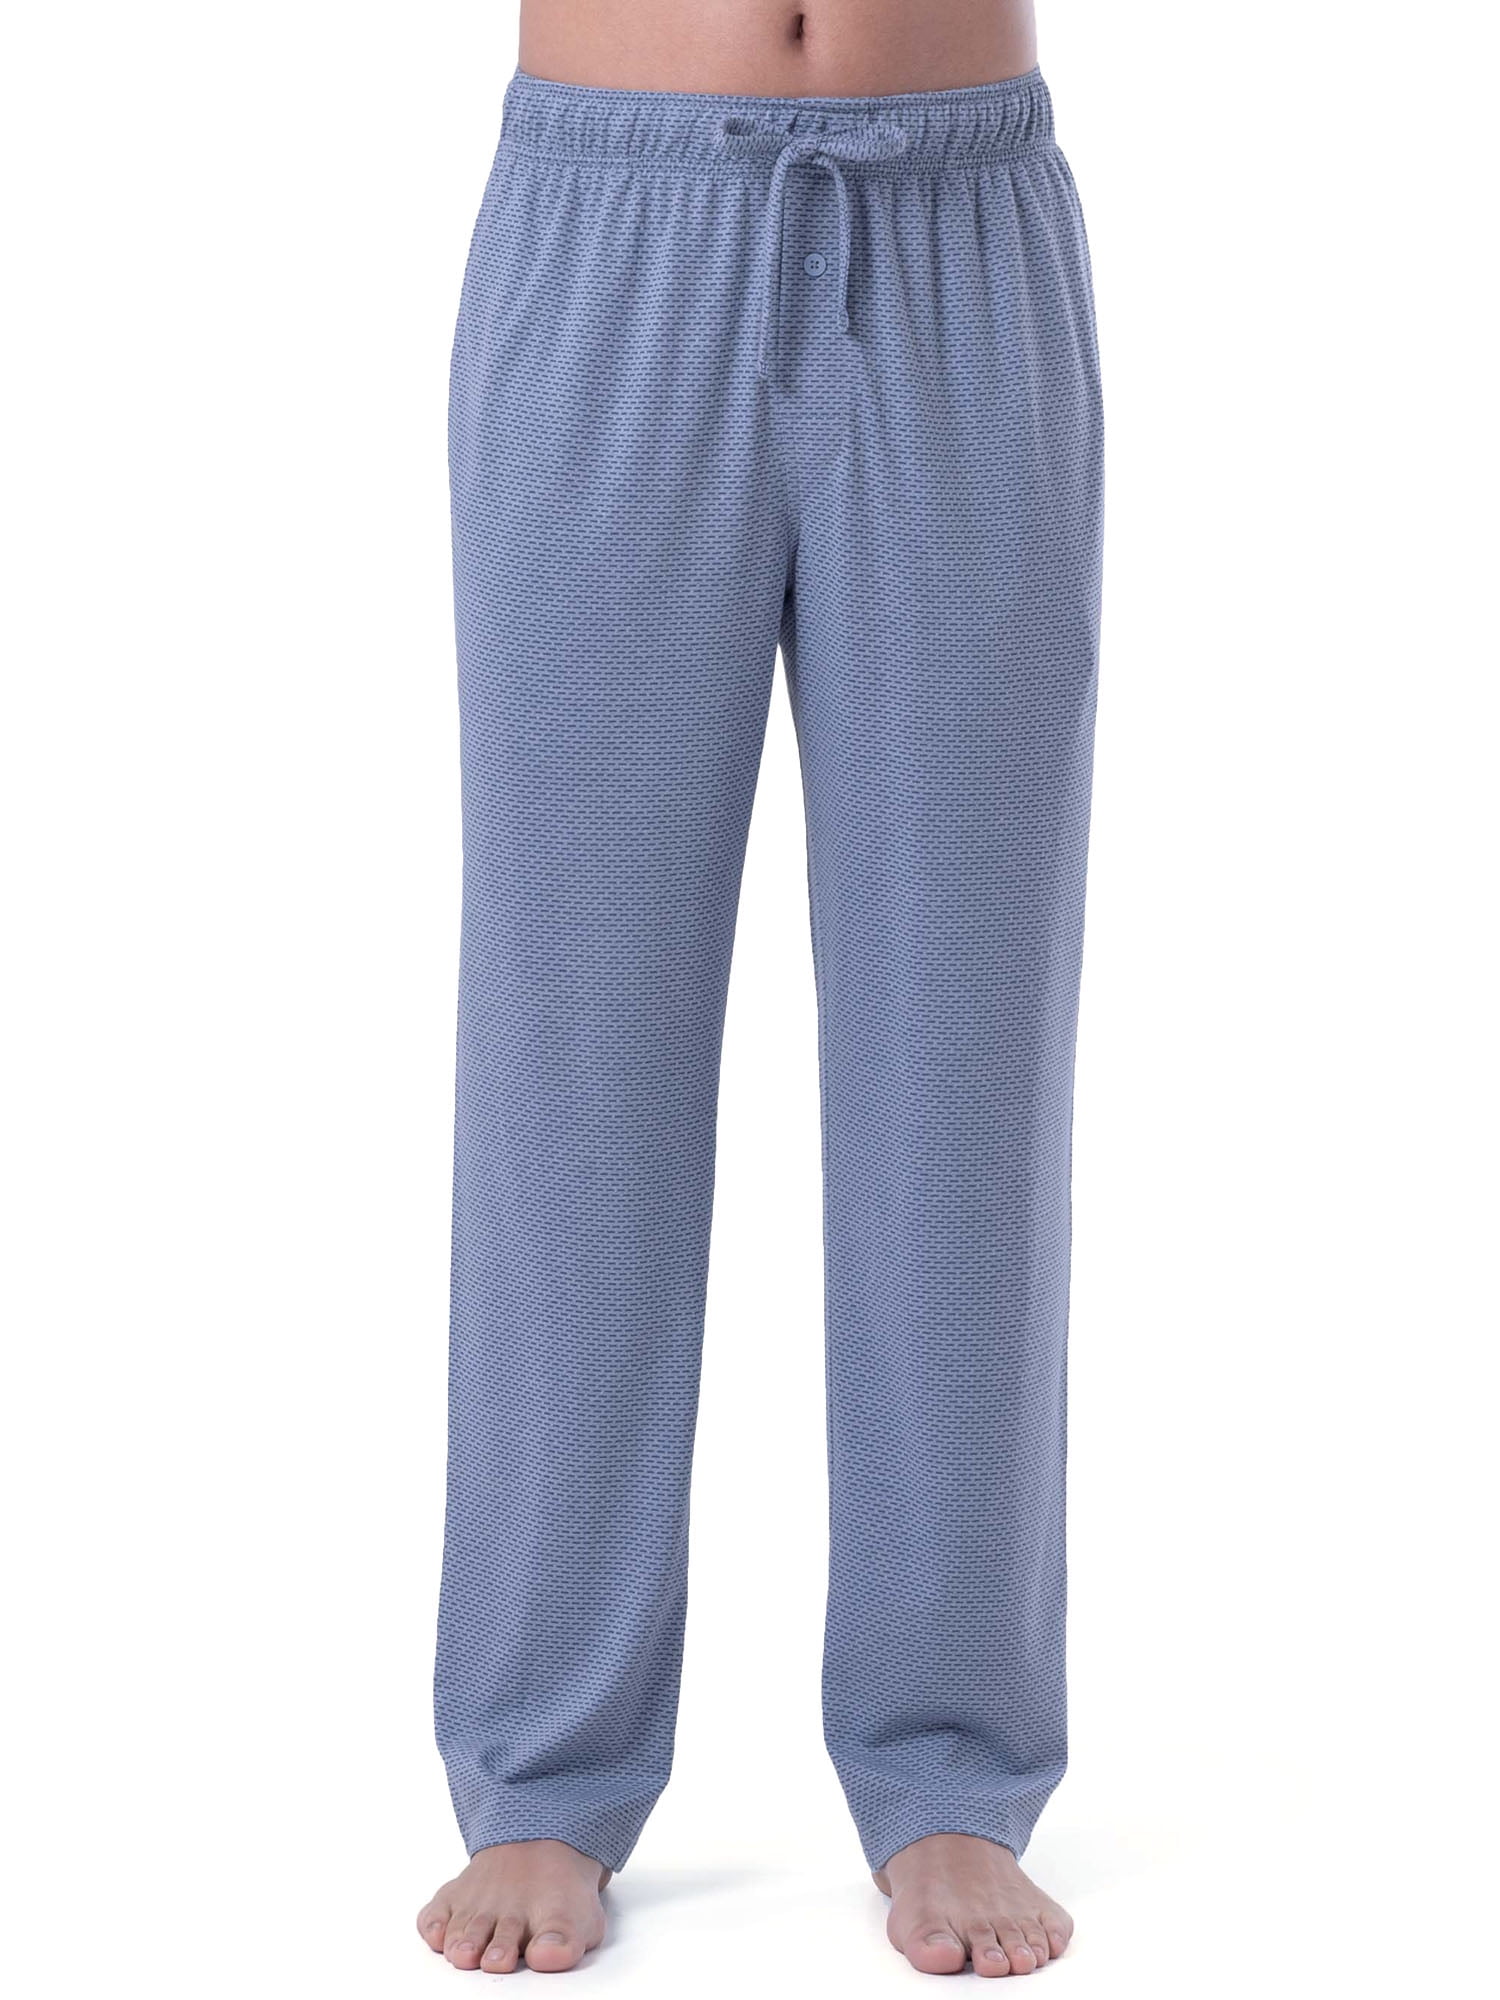 George Men's and Big Men's Breathable Mesh Knit Sleep Pajama Pants, S ...